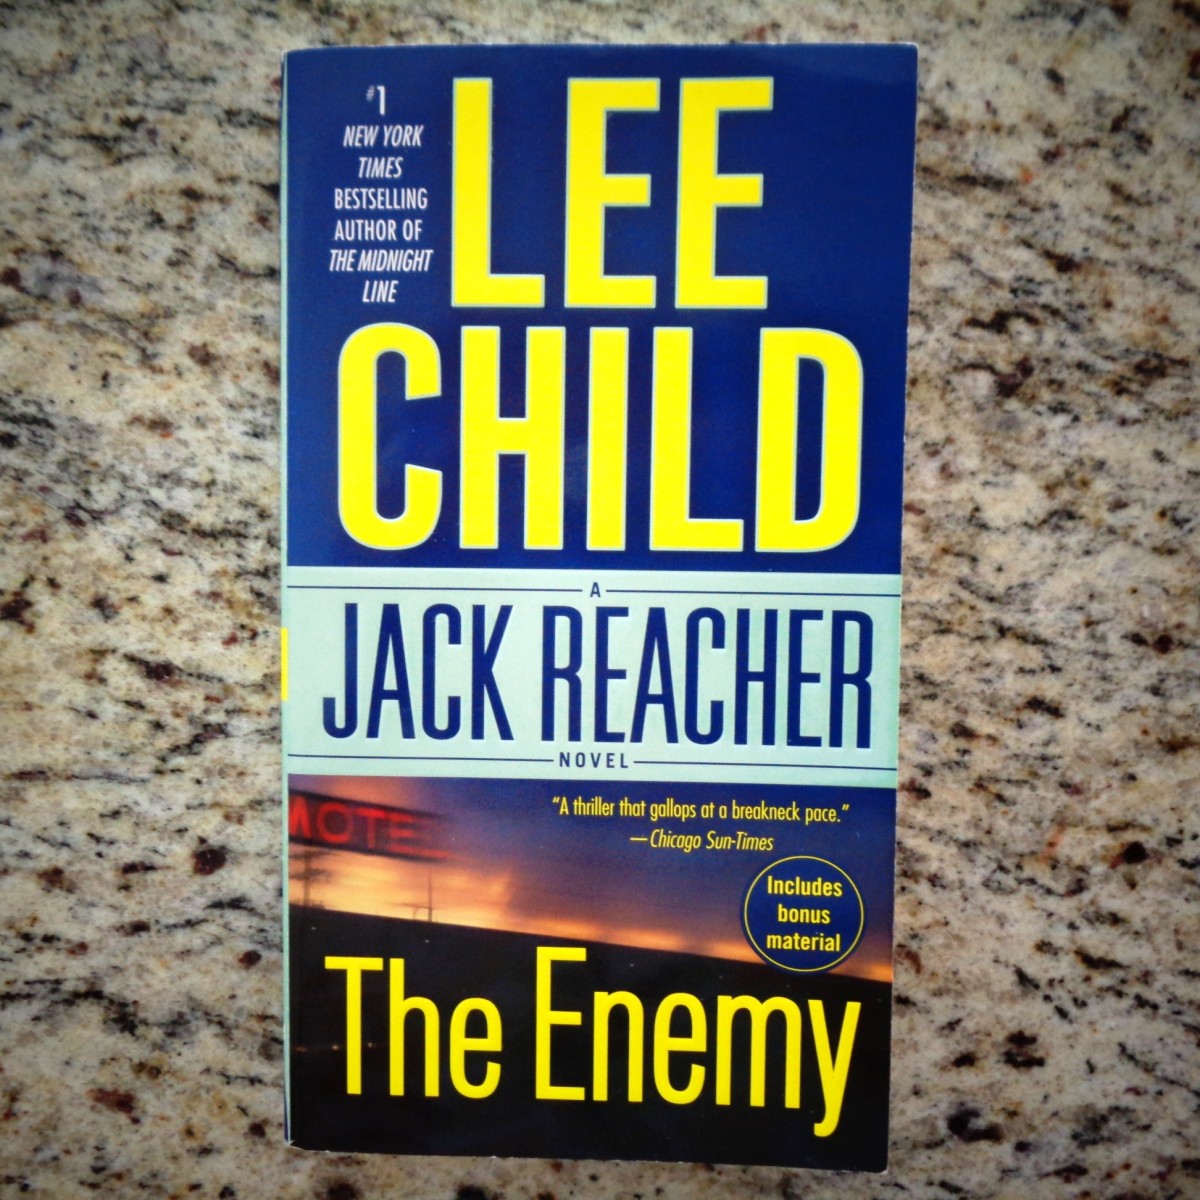 Jack Reacher, Lee Child's Unforgettable Character